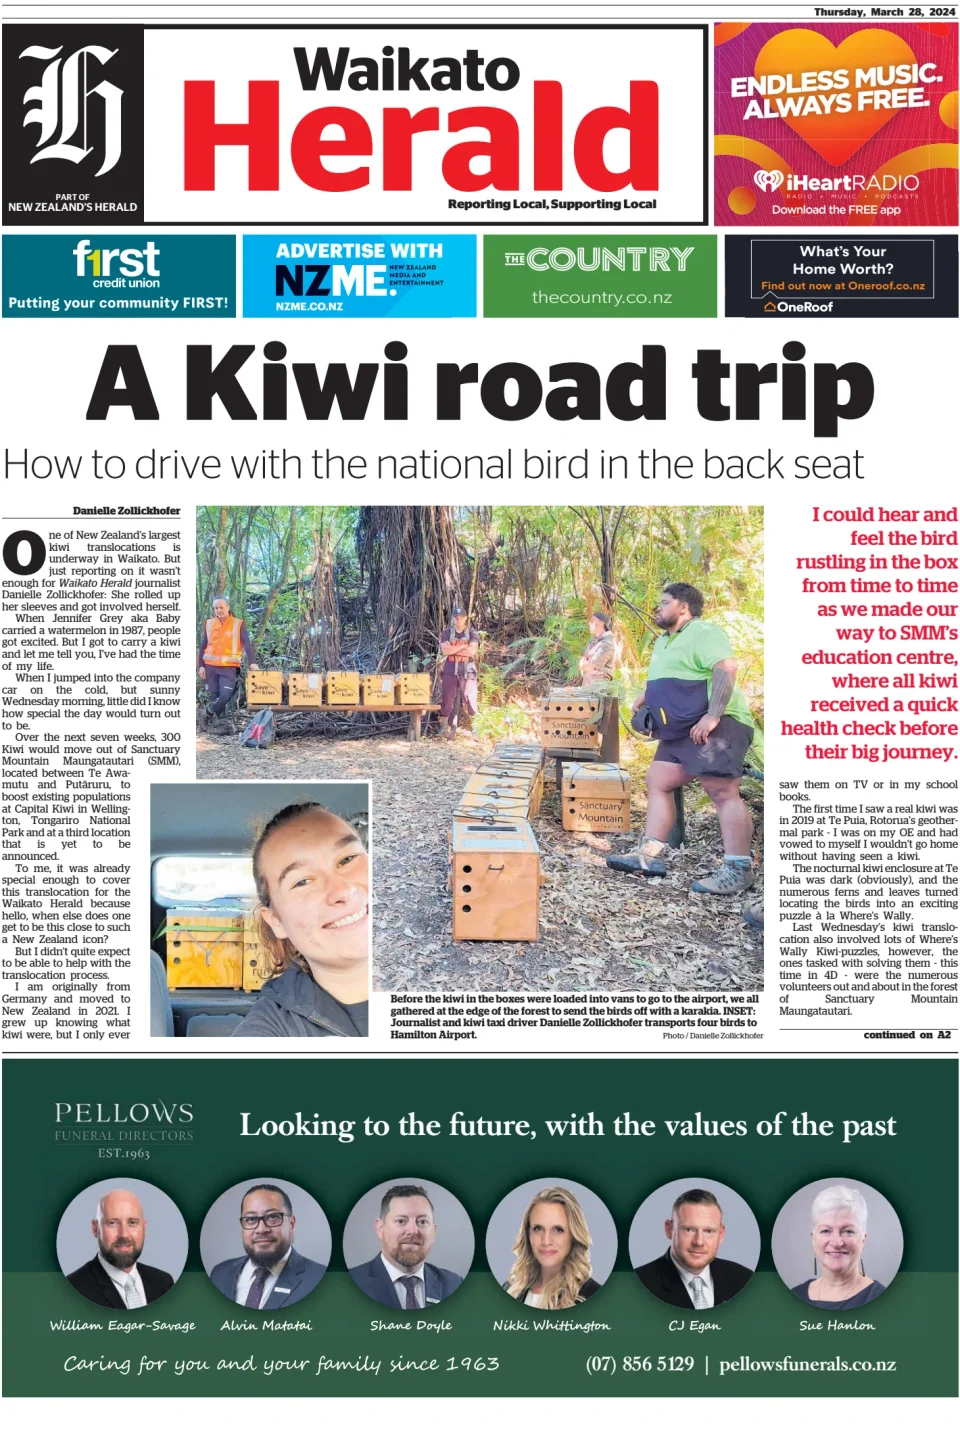 Waikato Herald